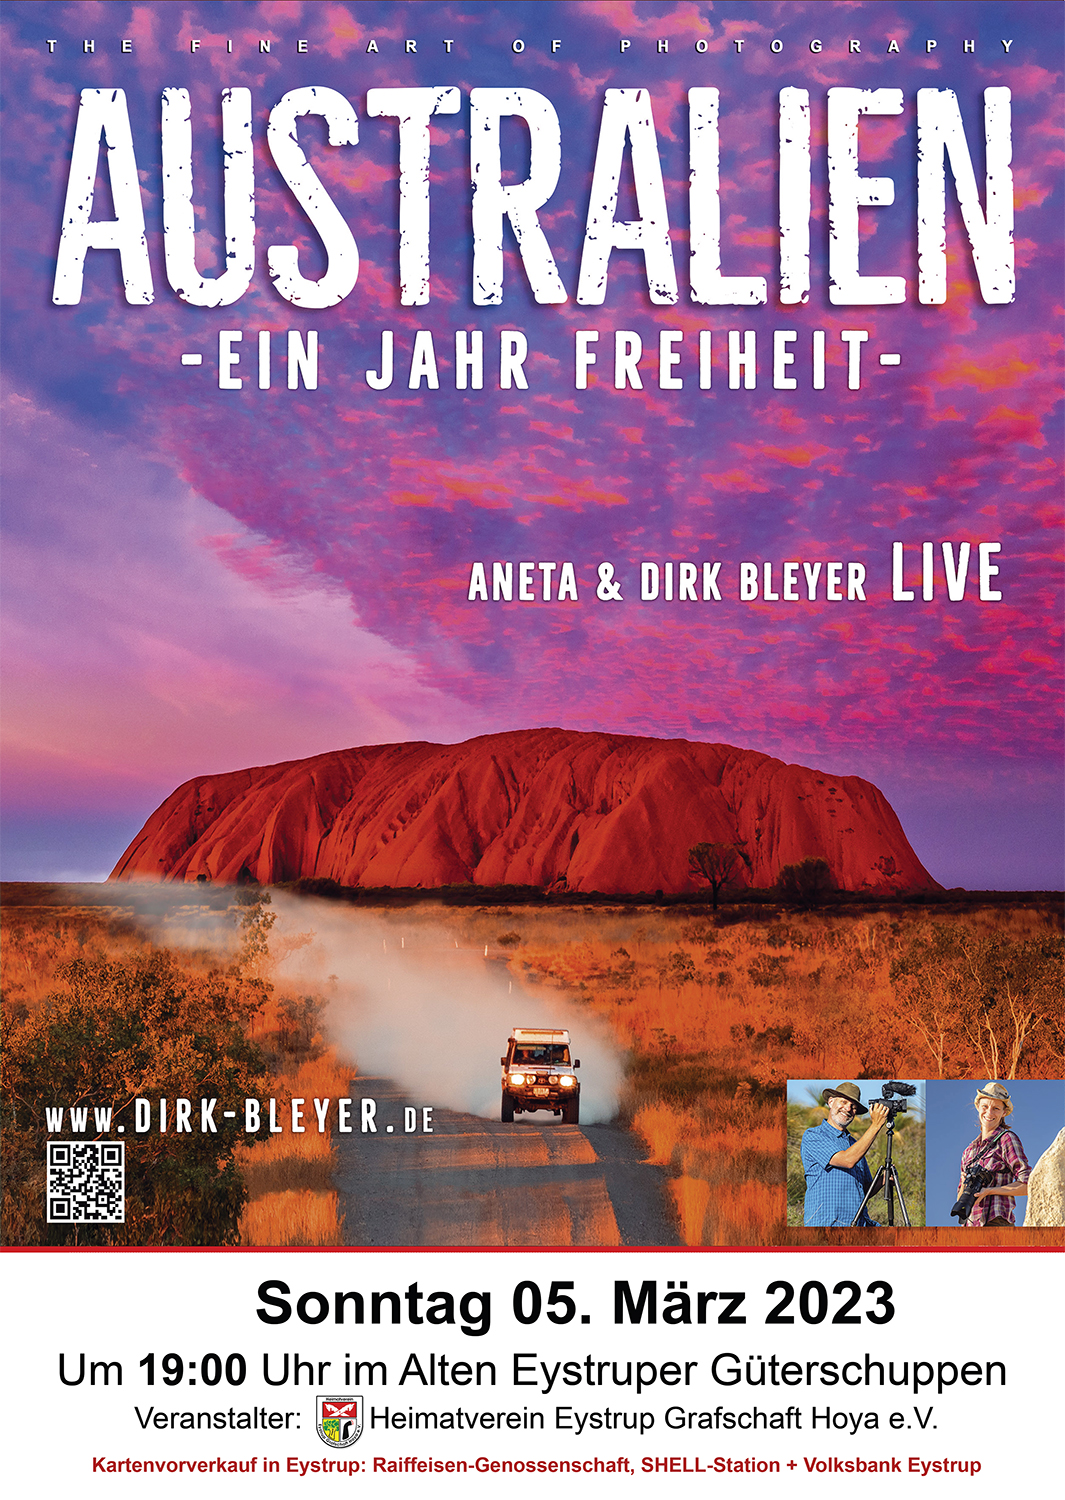 Reisebericht Australien